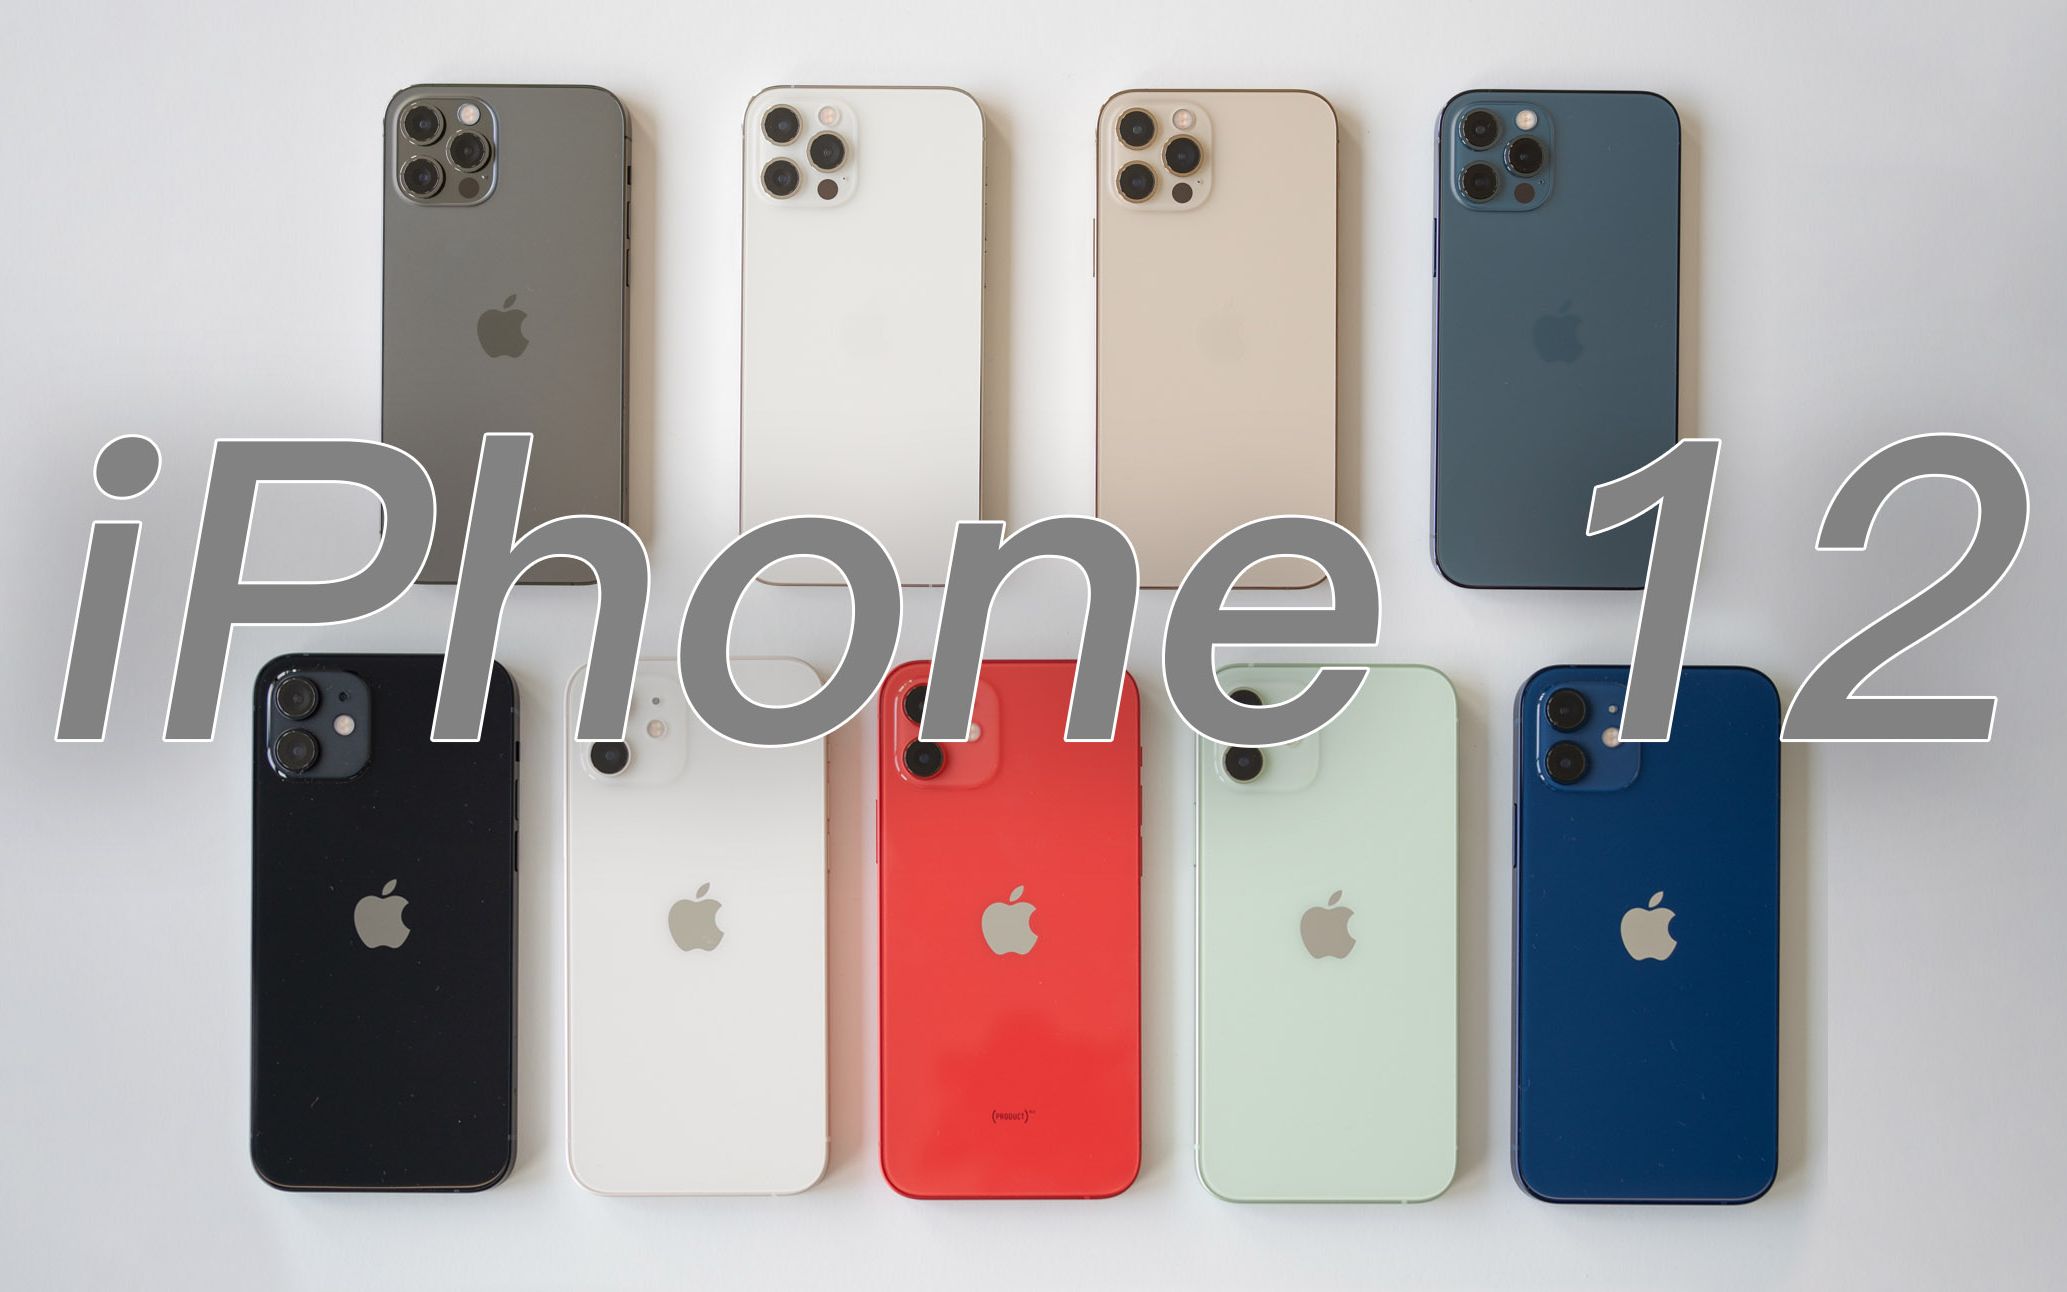 iPhone 11 哪个颜色比较好看? - 知乎